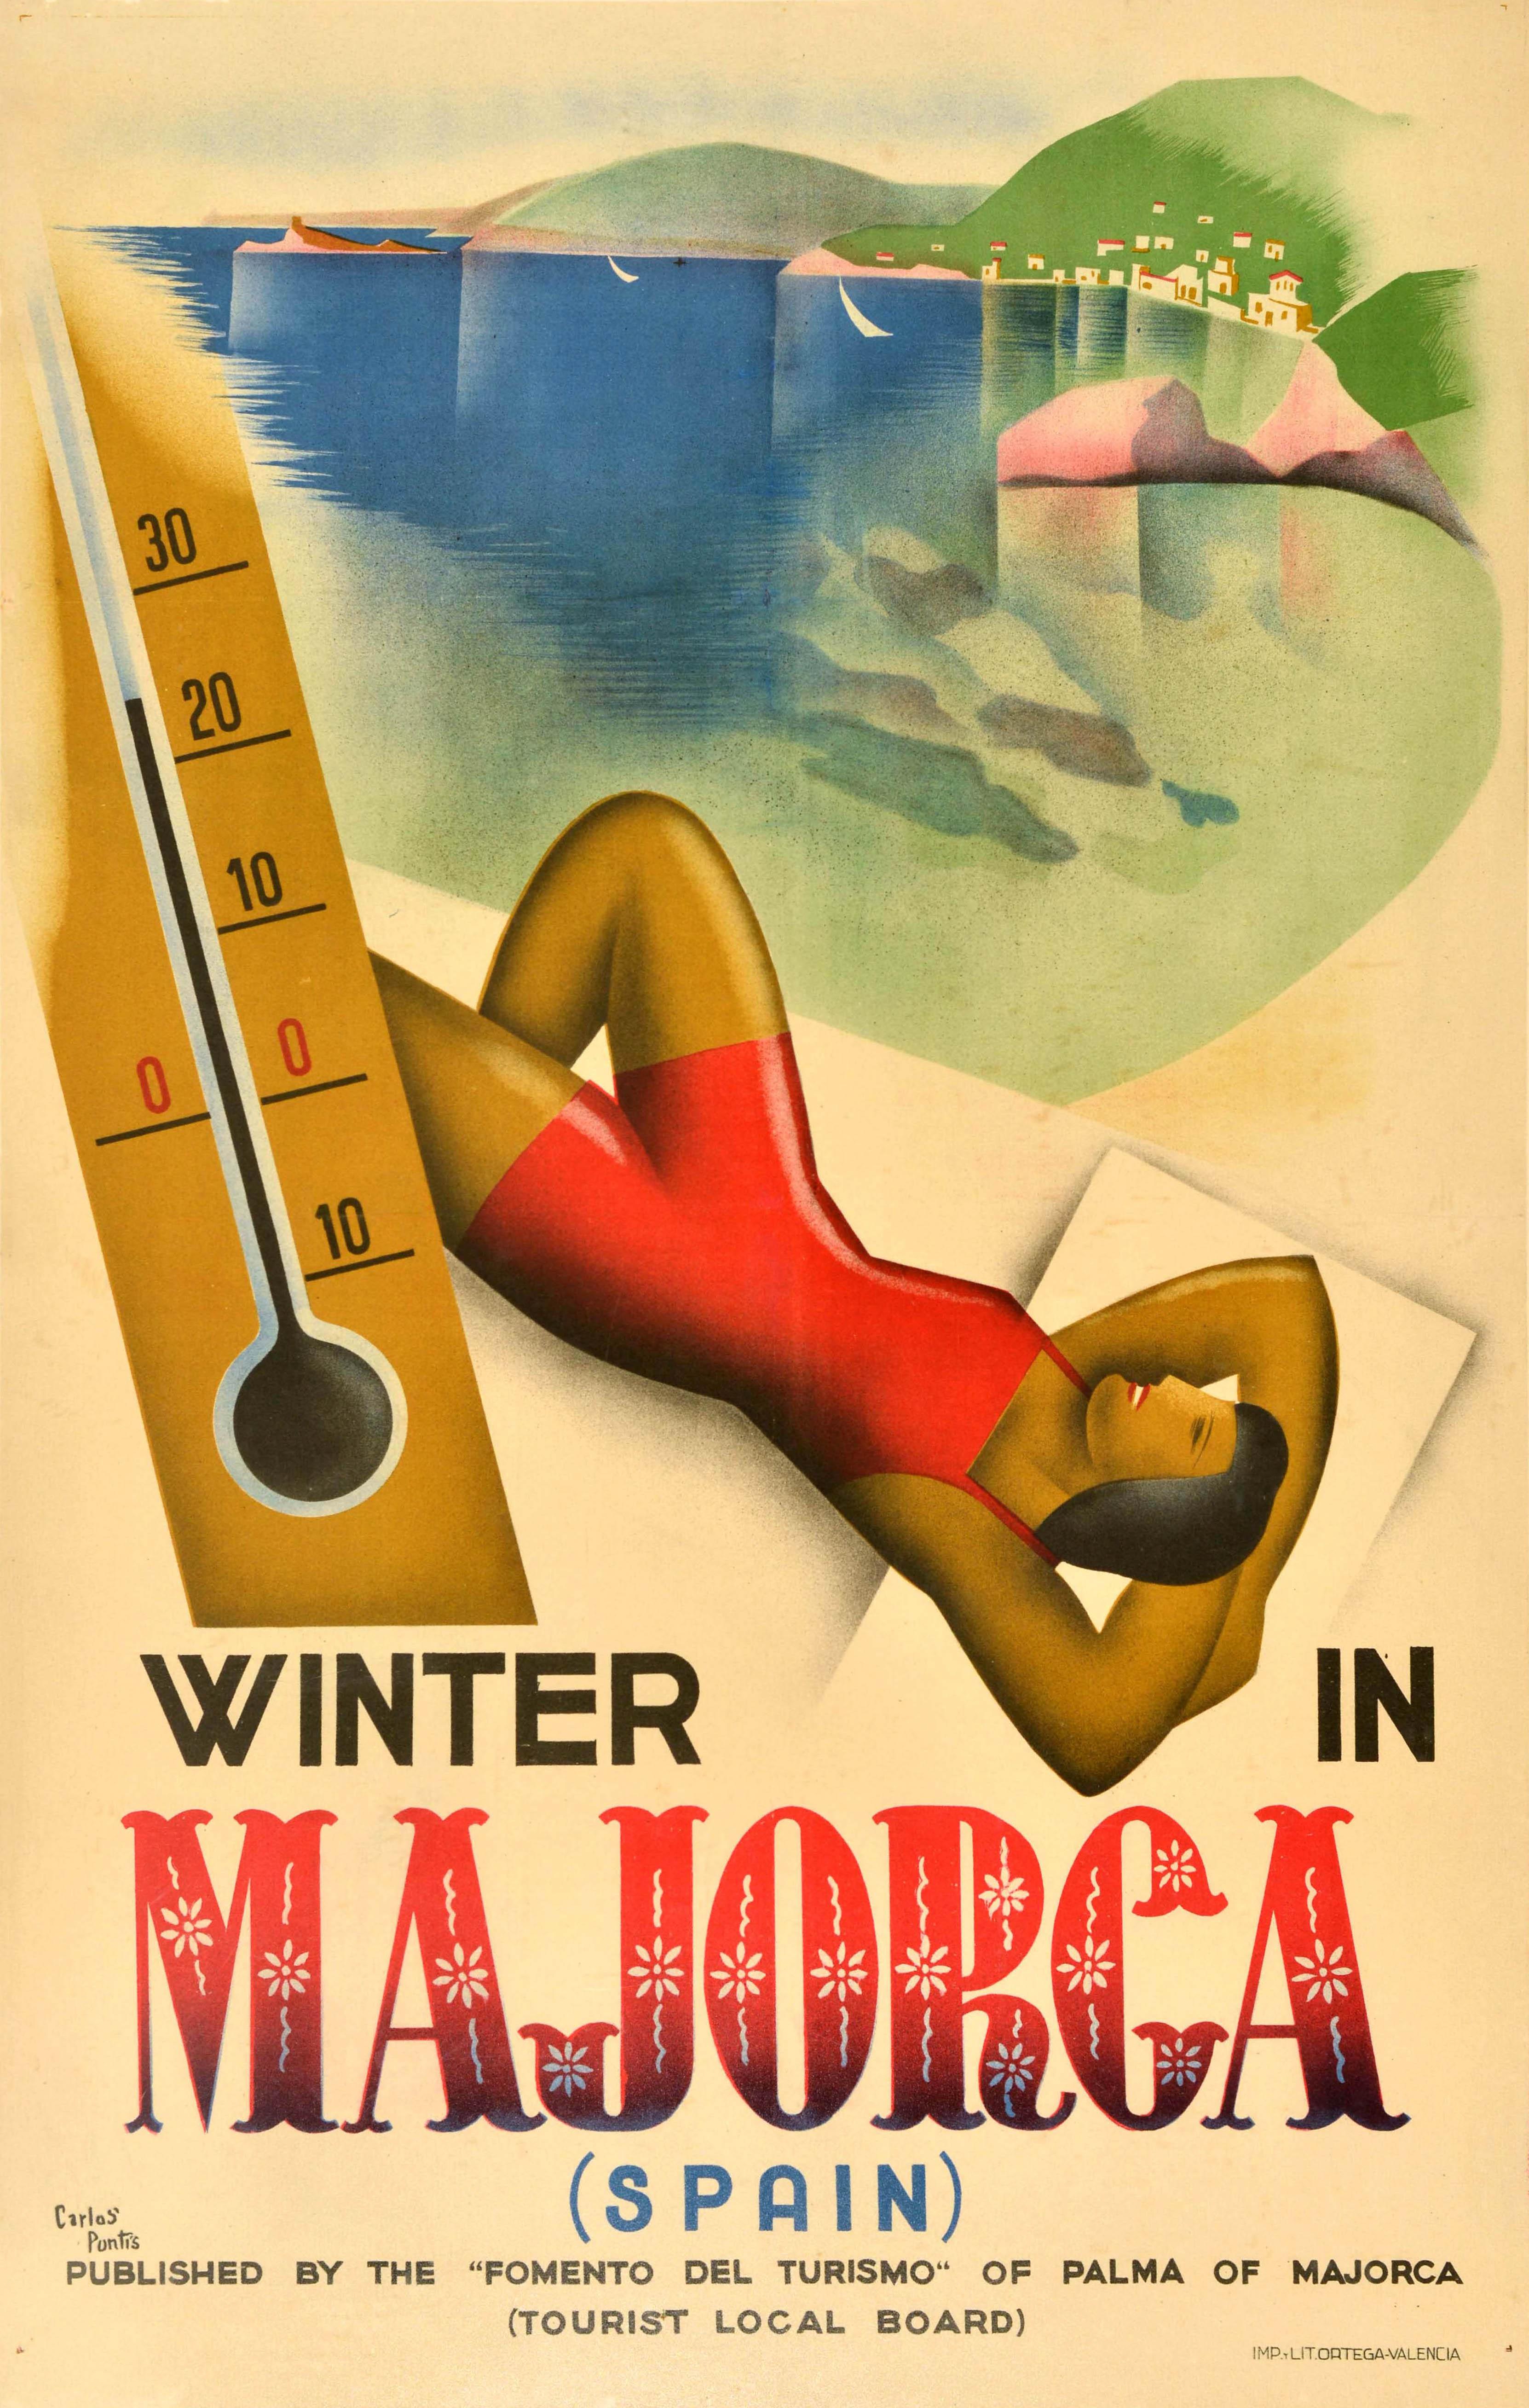 Carlos Puntis Nebot Print – Original-Vintage-Reiseplakat „Winter In Majorca“, Spanien, Carlos Puntis, Art déco